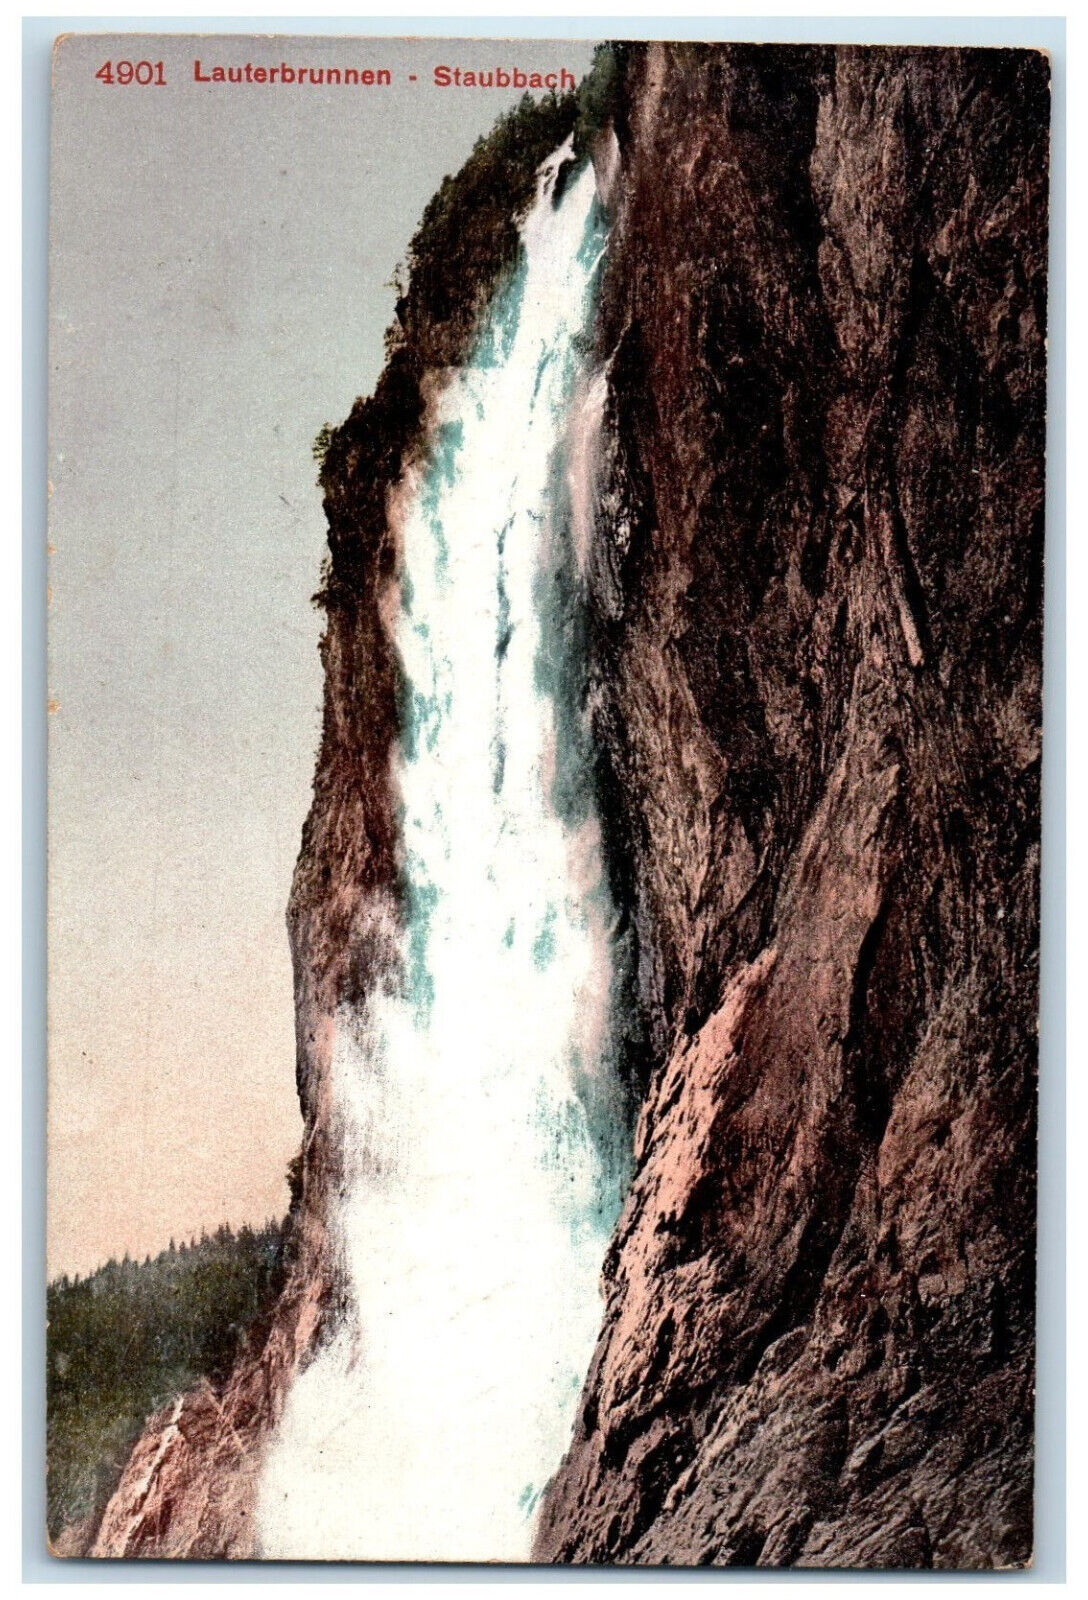 1911 Lauterbrunnen-Staubbach Falls Switzerland Antique Posted Postcard